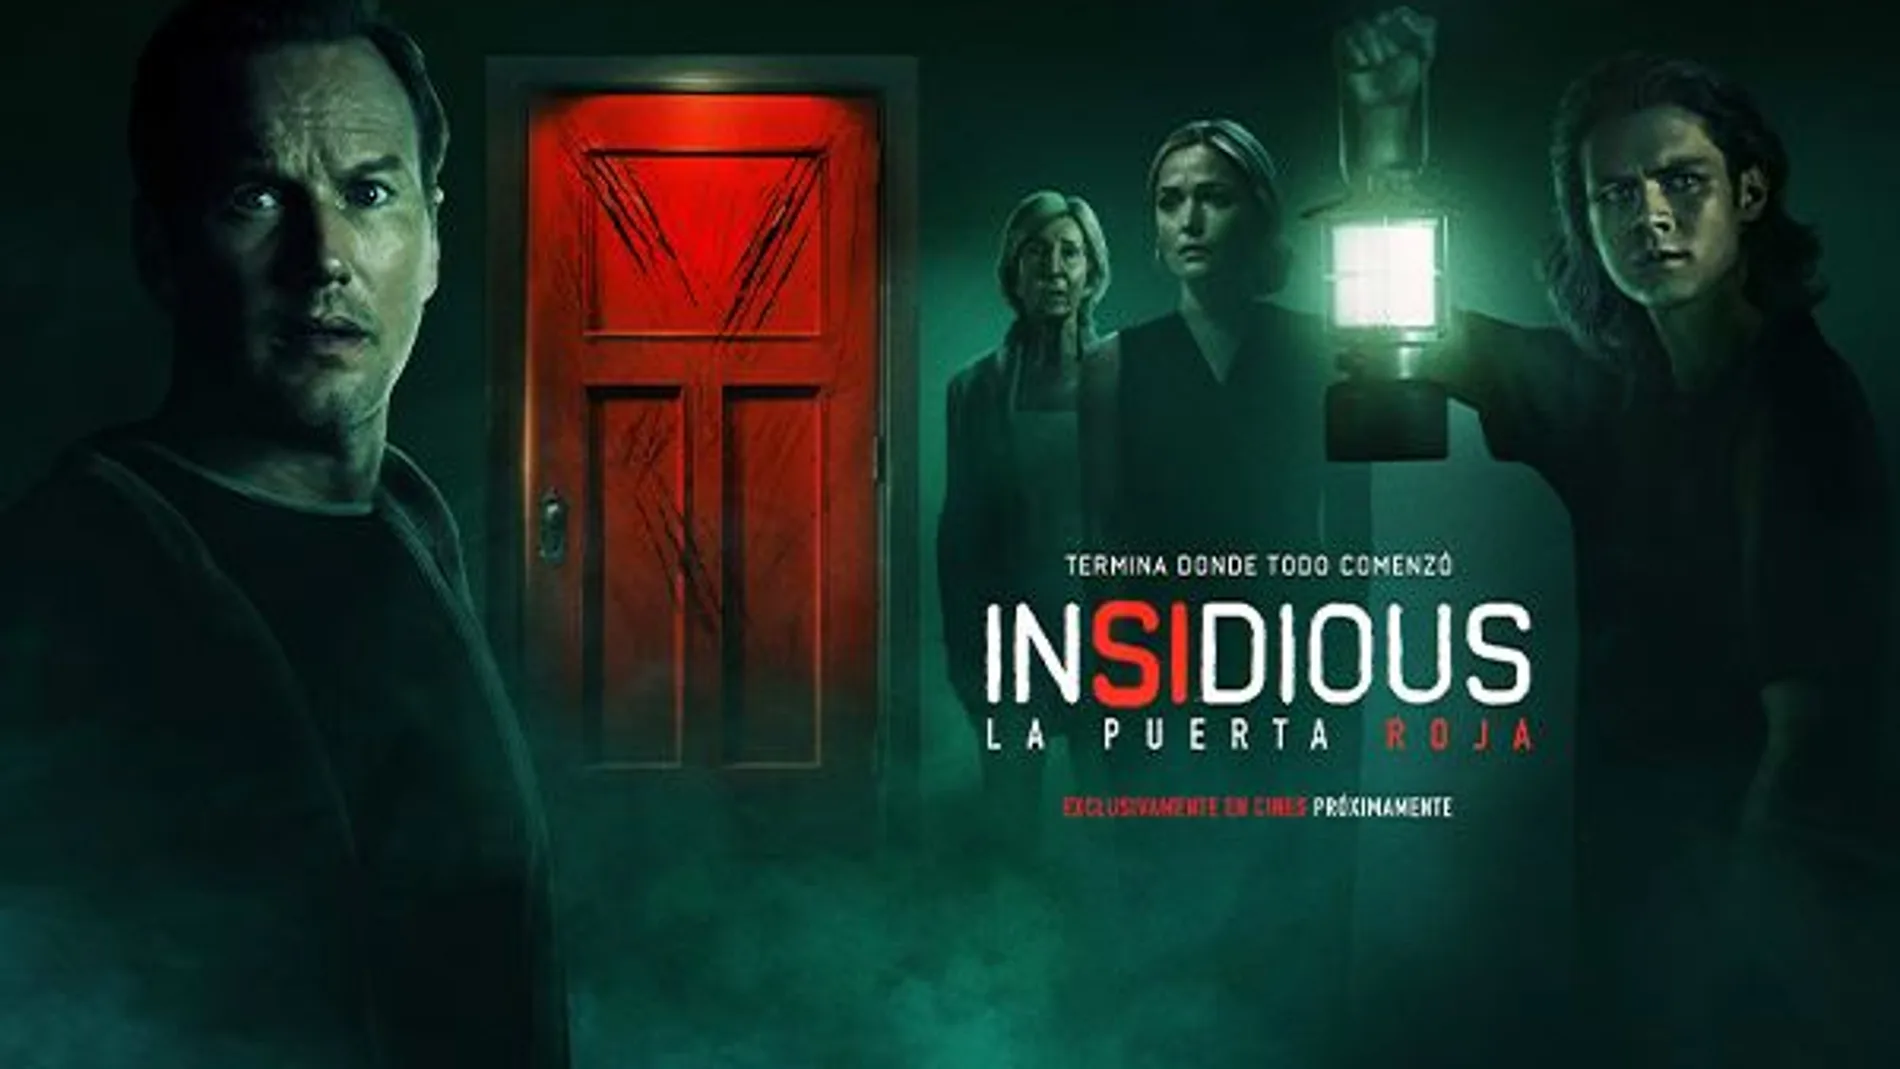 Insidious: La puerta roja: El legado del terror continúa en la quinta entrega de la saga